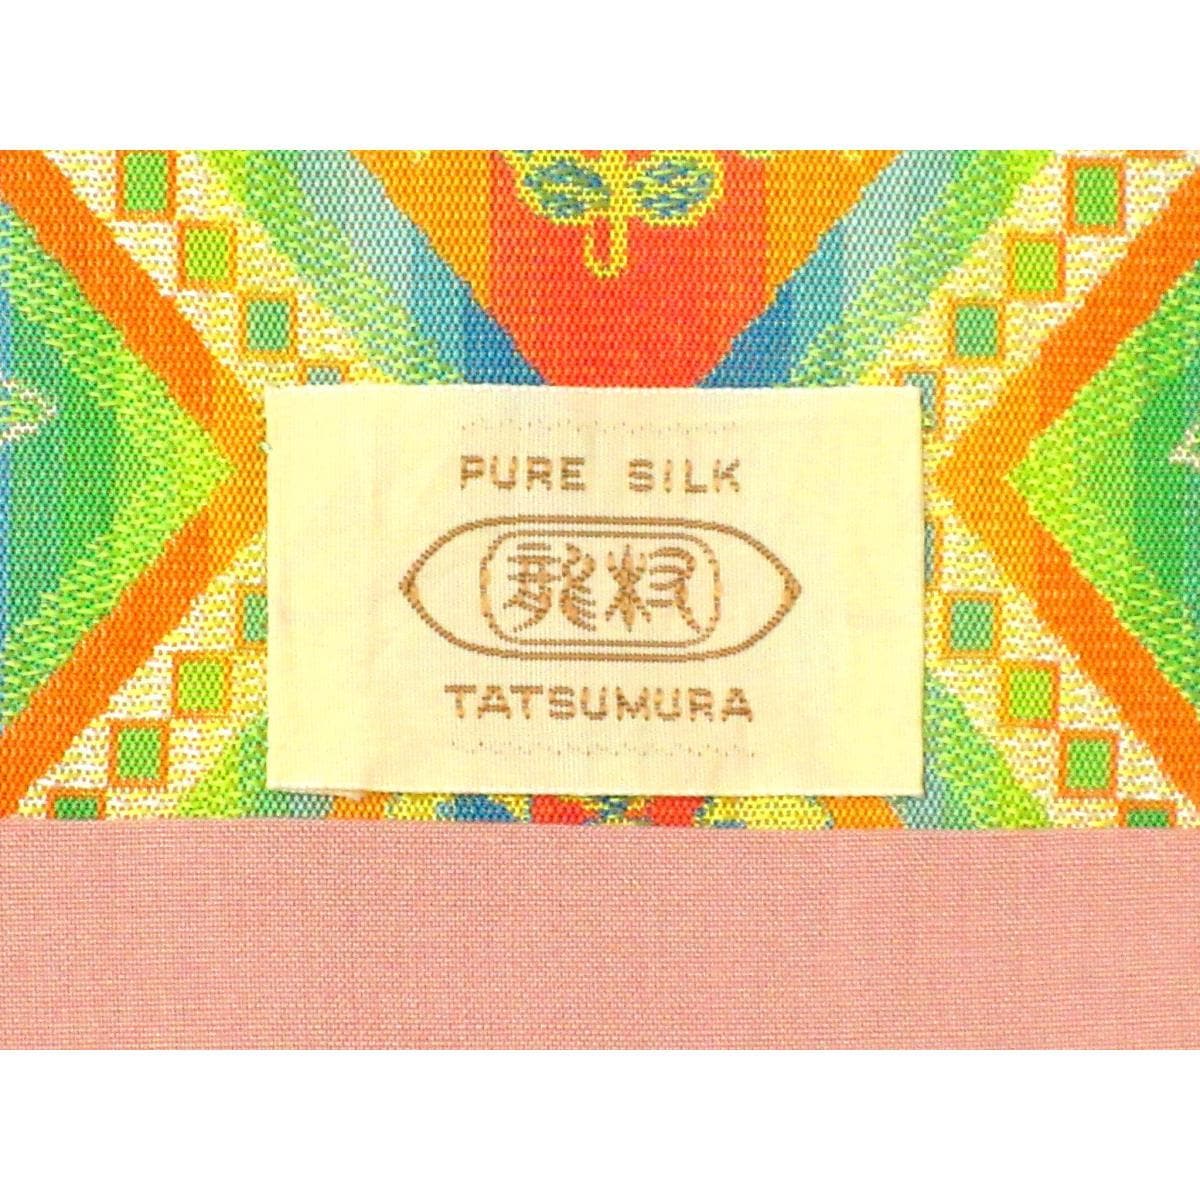 Nagoya Tatshumura Art Textile Opening Nagoya Full Pattern